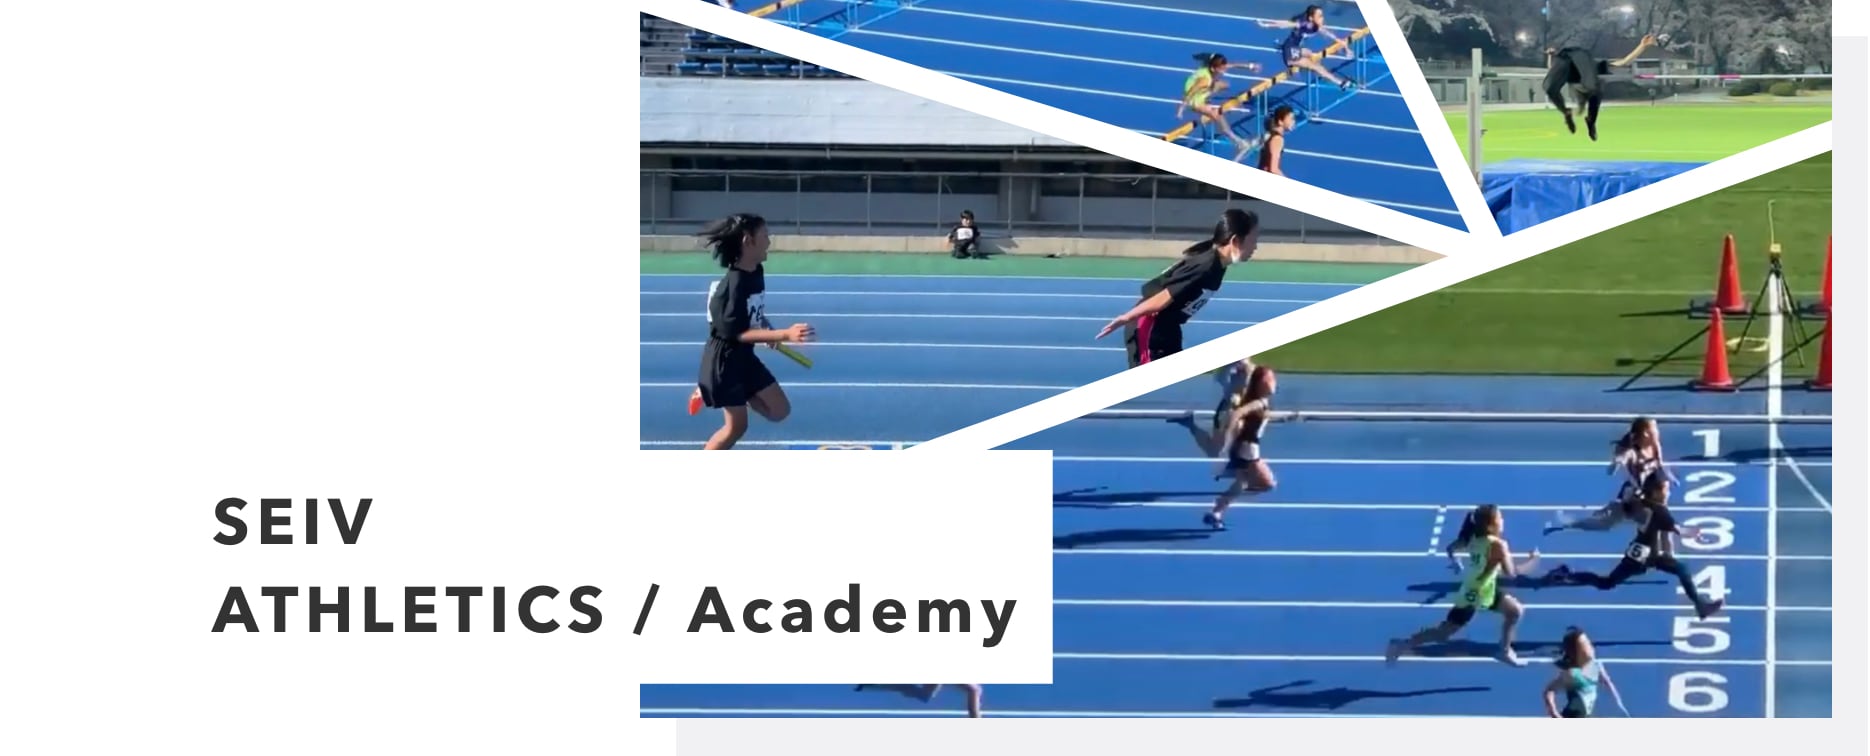 Seiv athletics academy 練習や試合の風景